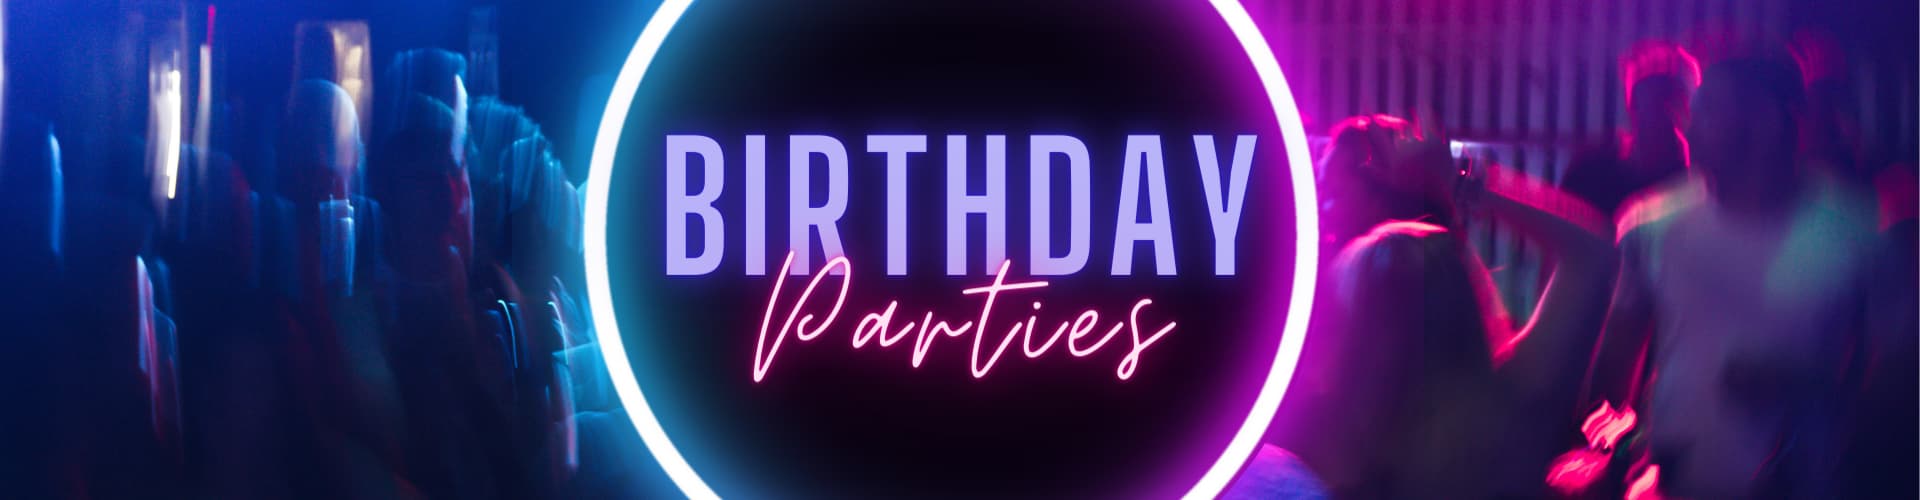 Birthday Parties